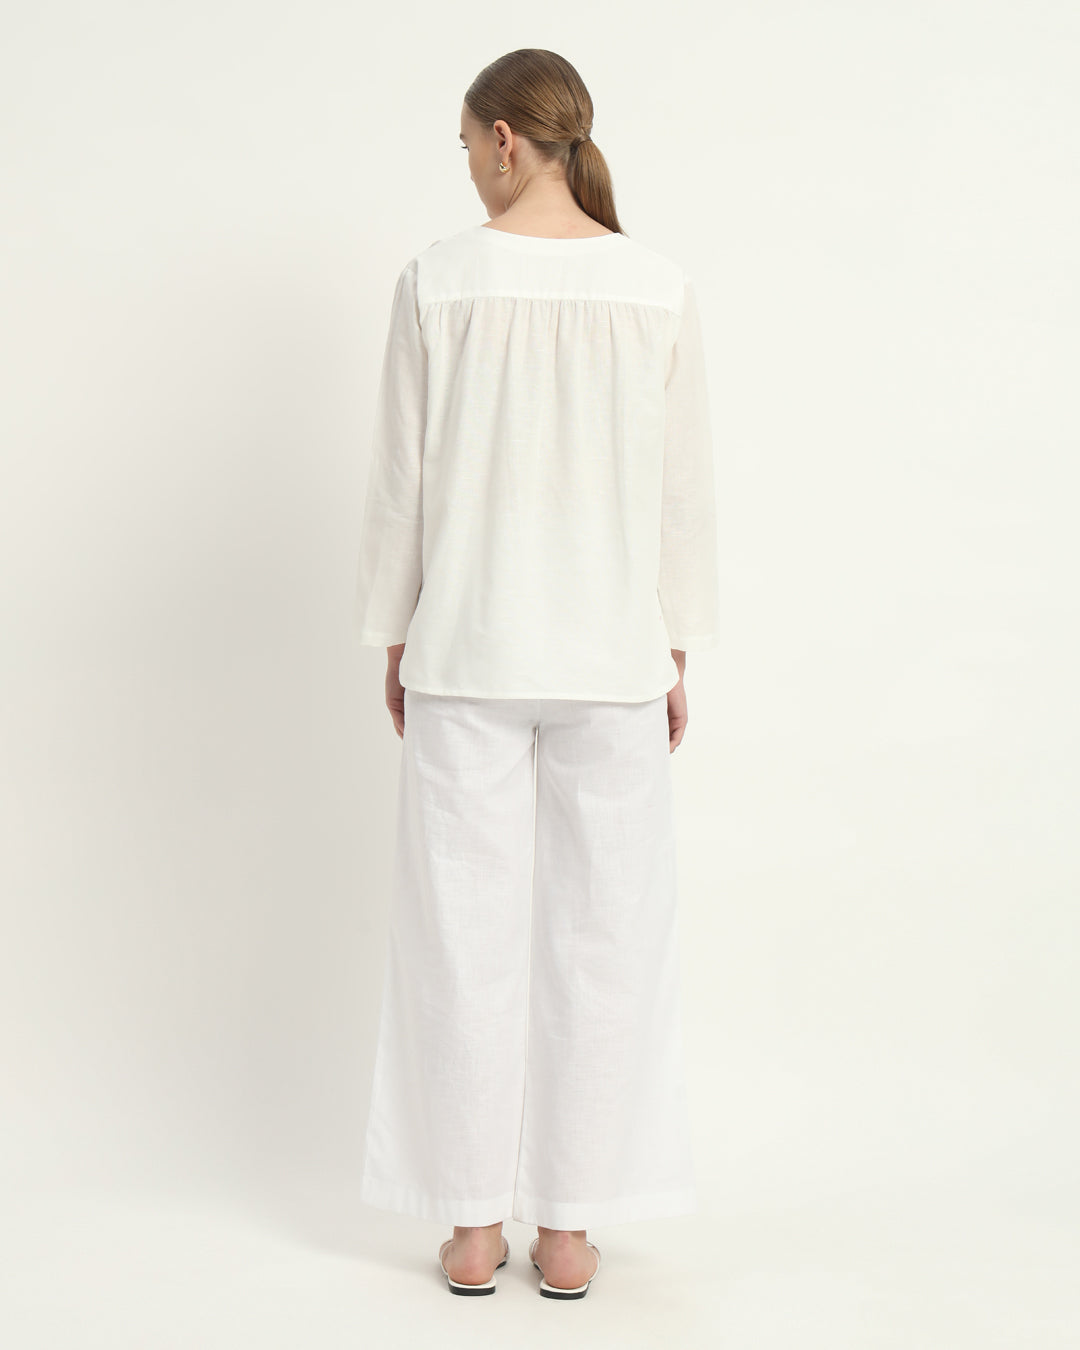 Pants Matching Set- White Classic Grace Linen